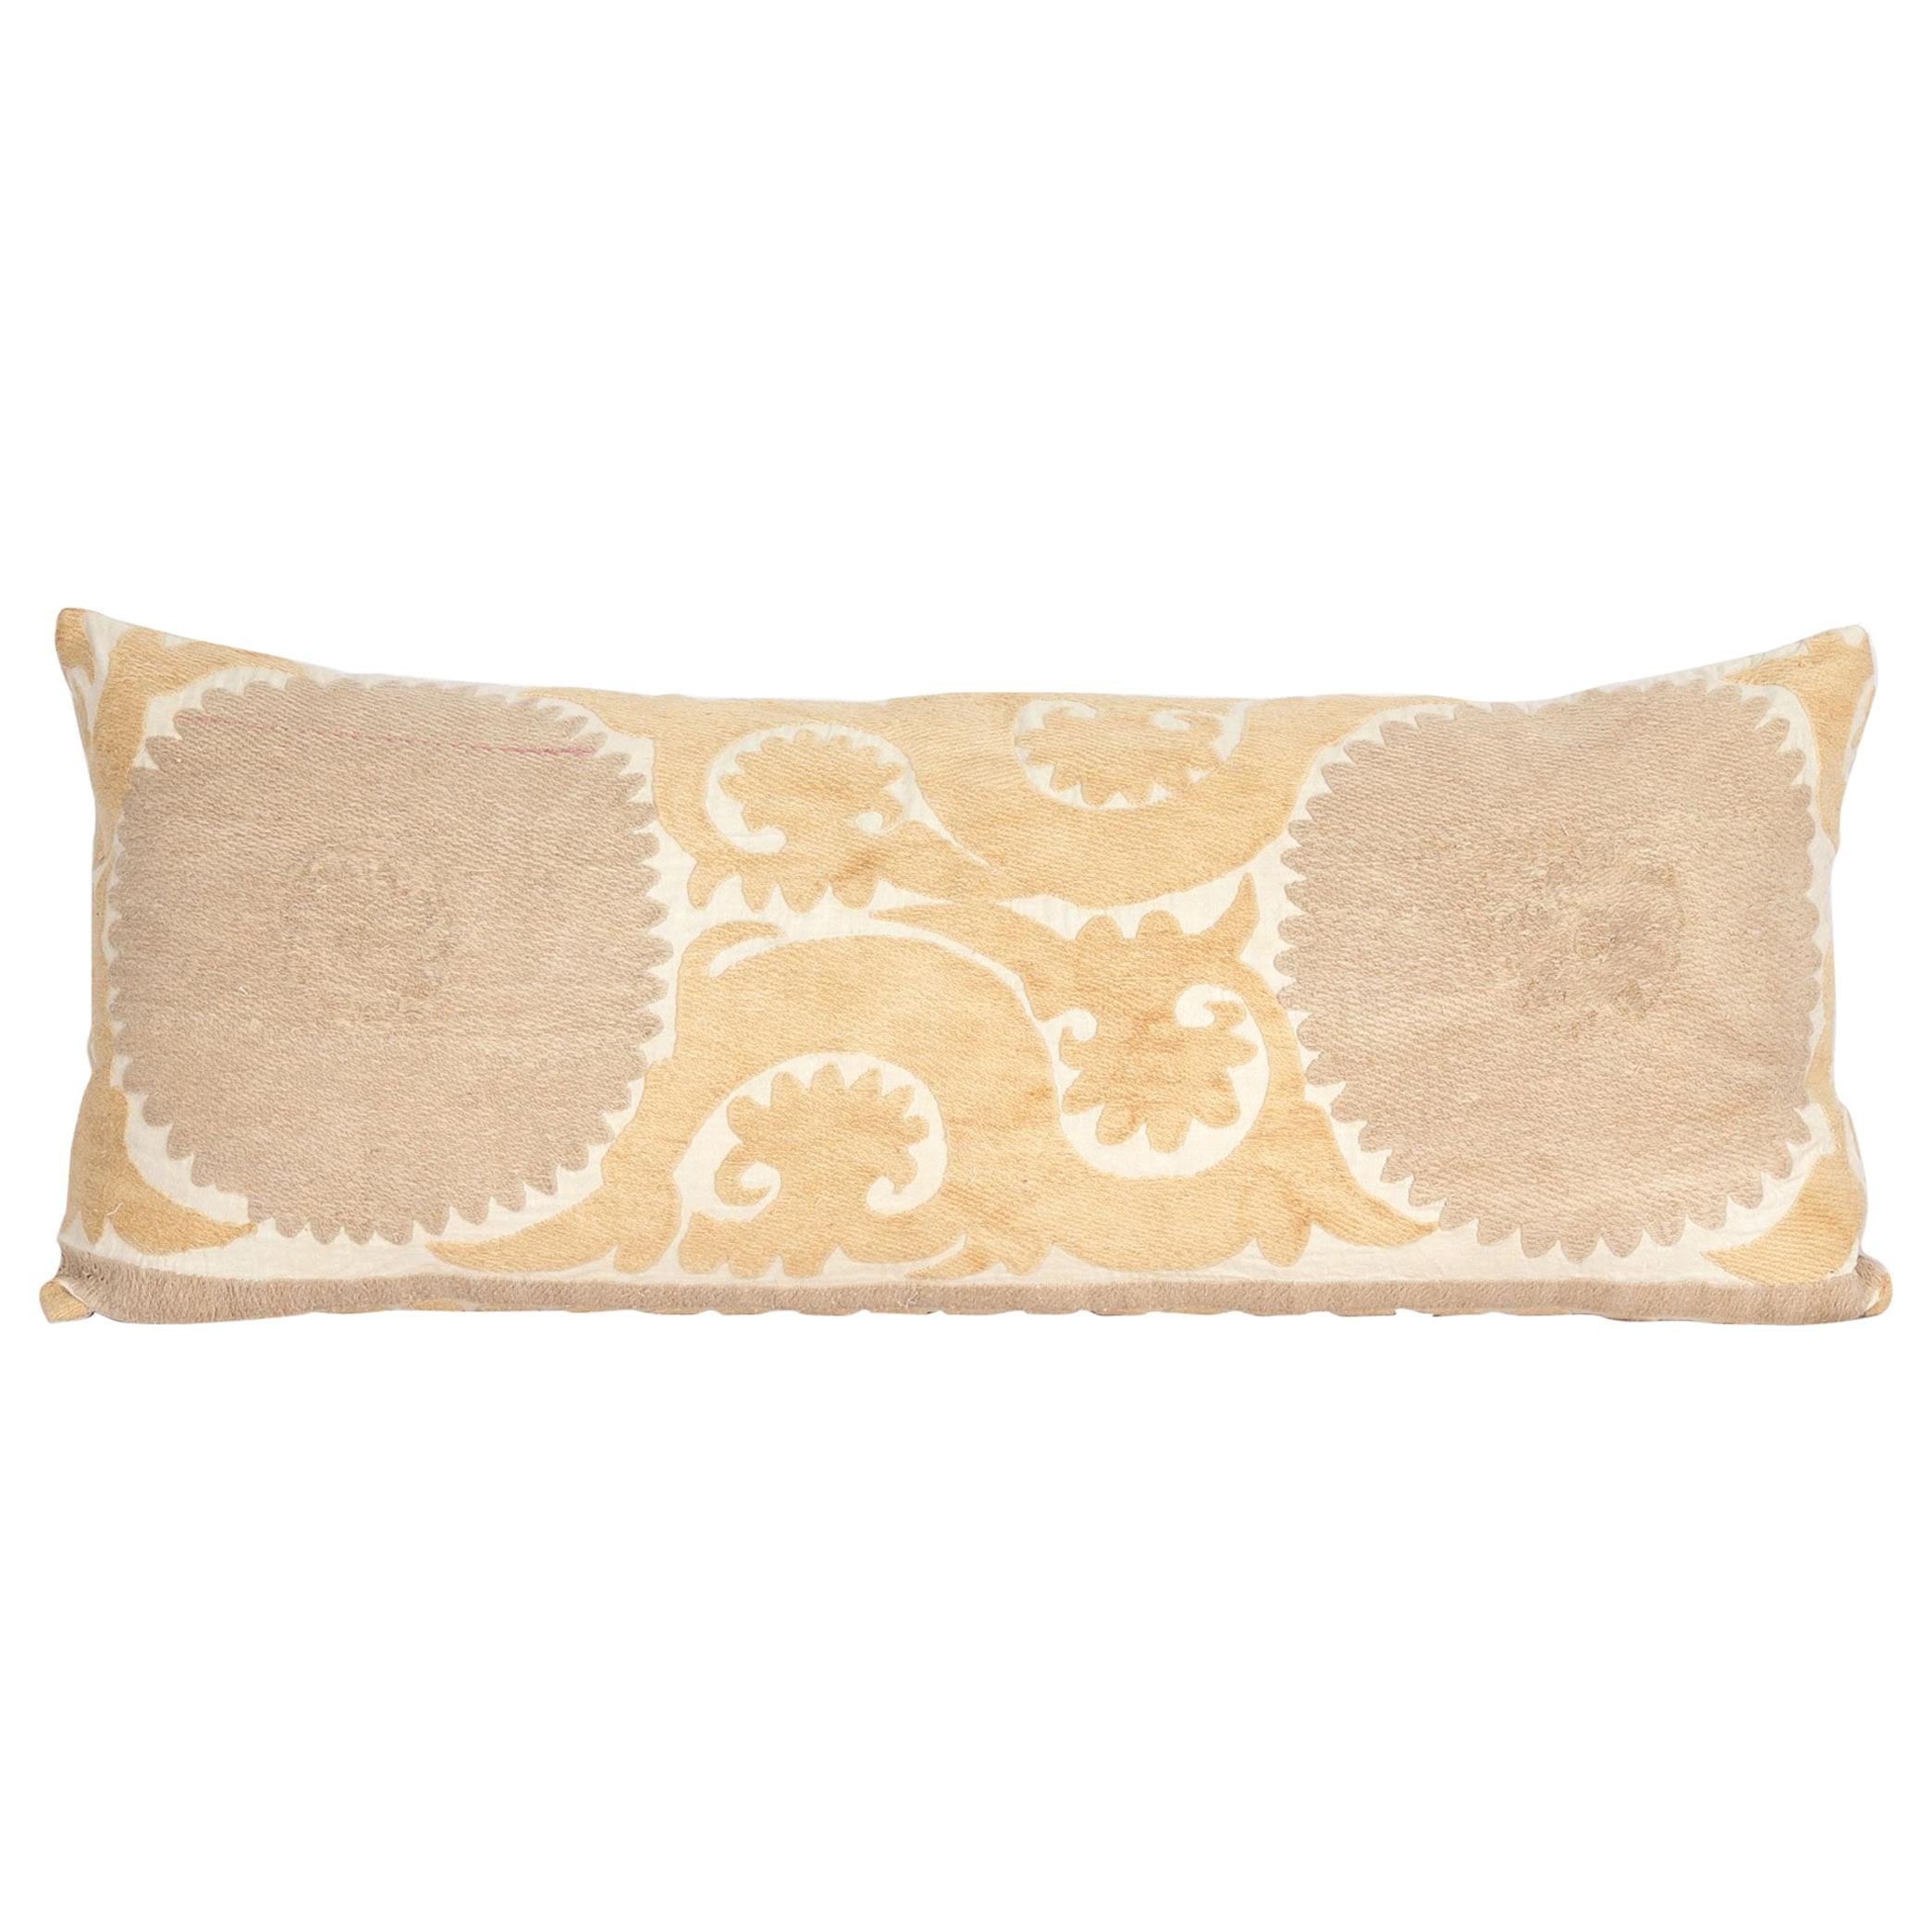 Suzani Lumbar Pillow Case Fashioned from a Mid-20th Century Uzbek Suzani